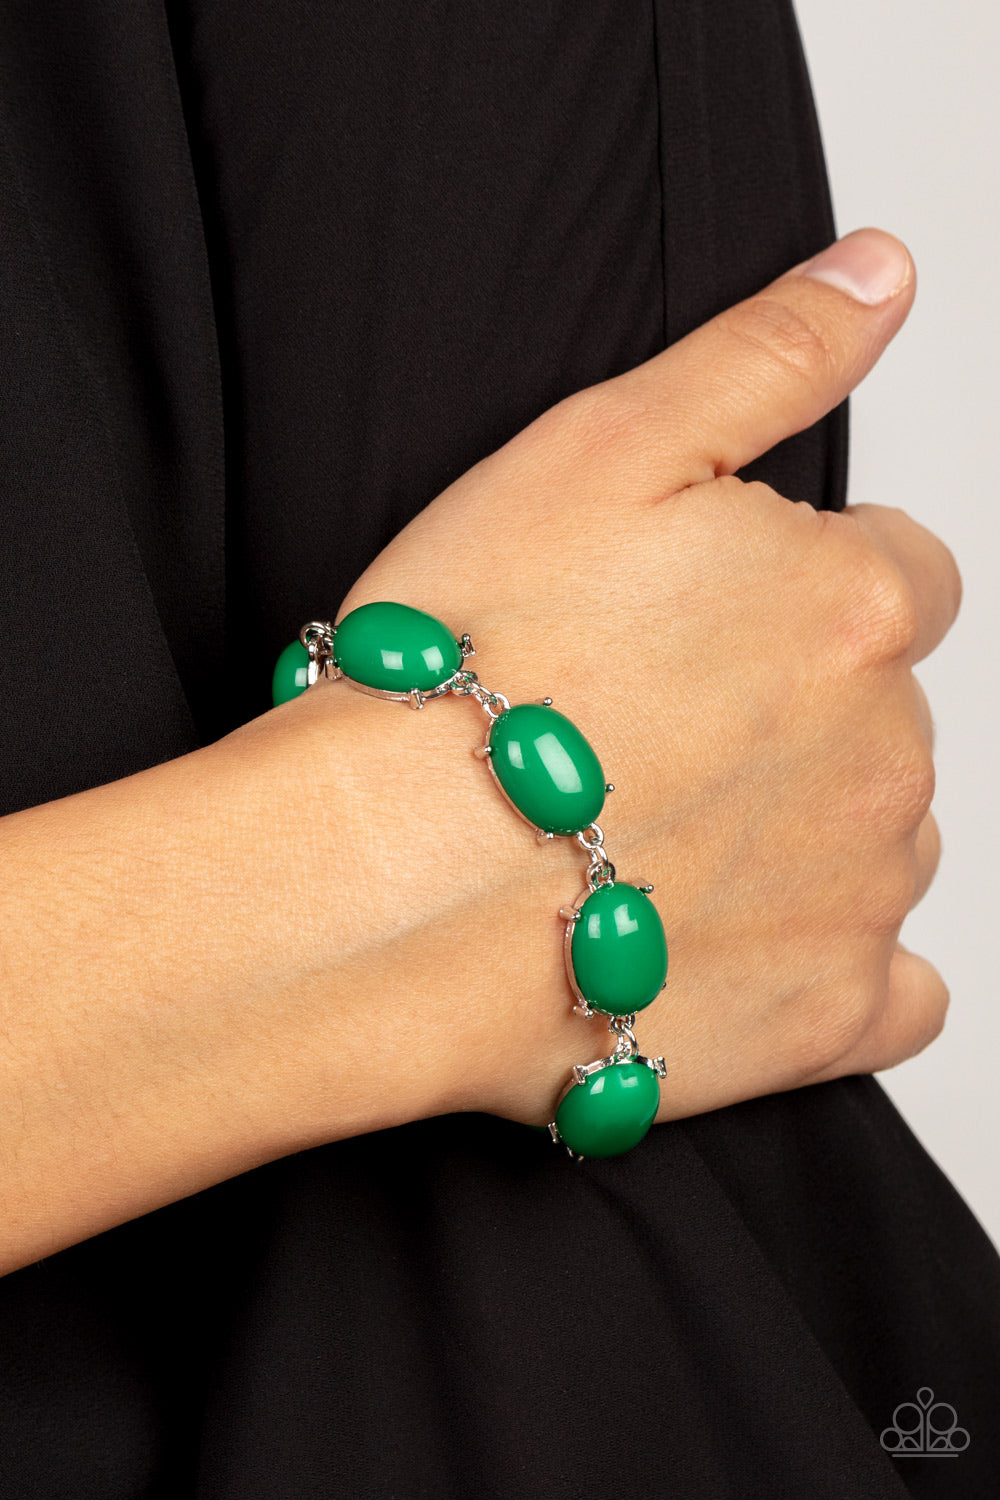 Paparazzi Bracelets - Confidently Colorful - Green